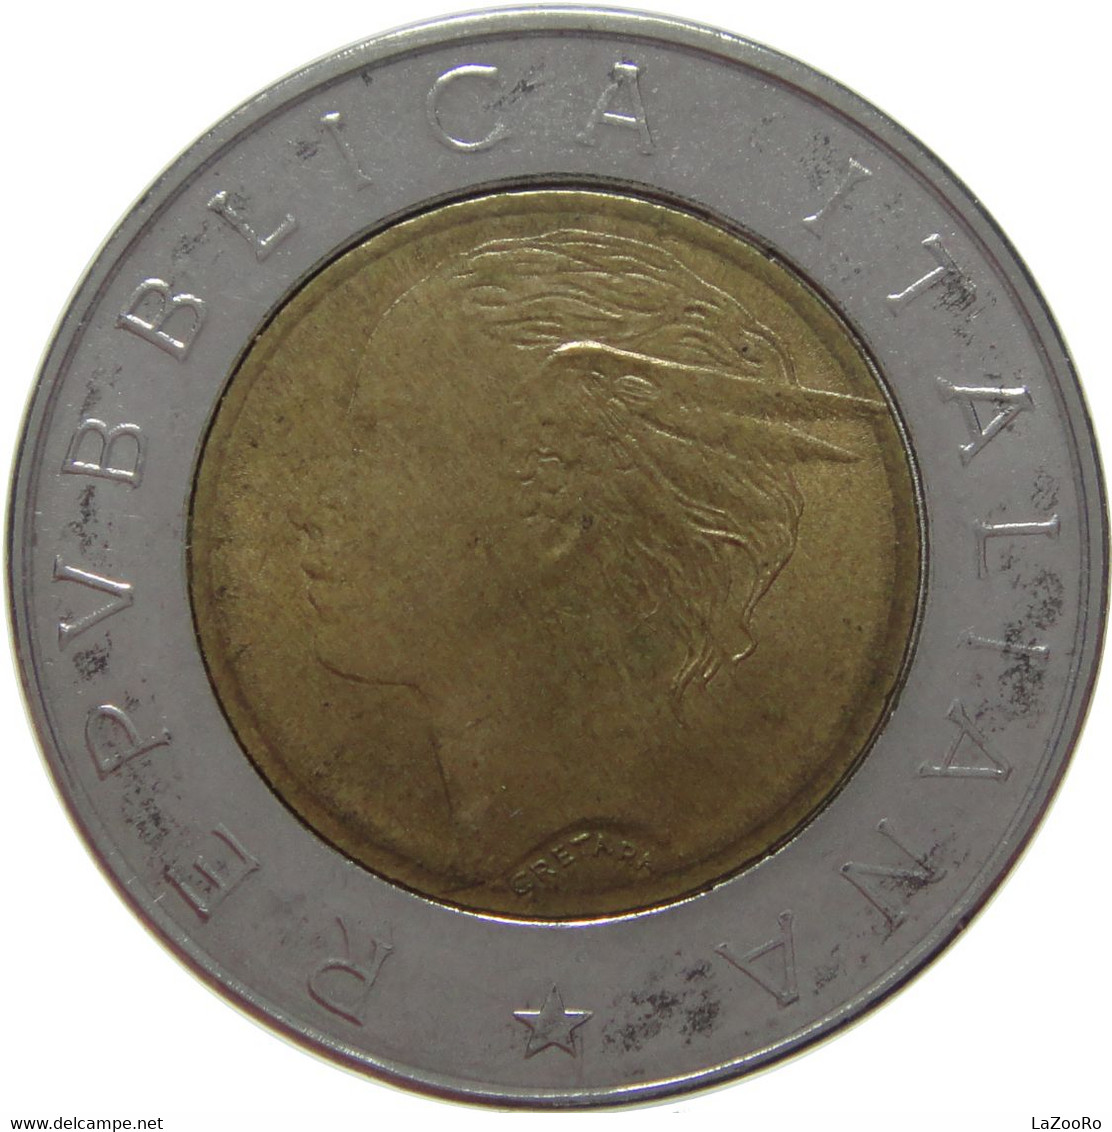 LaZooRo: Italy 500 Lire 1993 XF / UNC Bank Of Italy - Gedenkmünzen